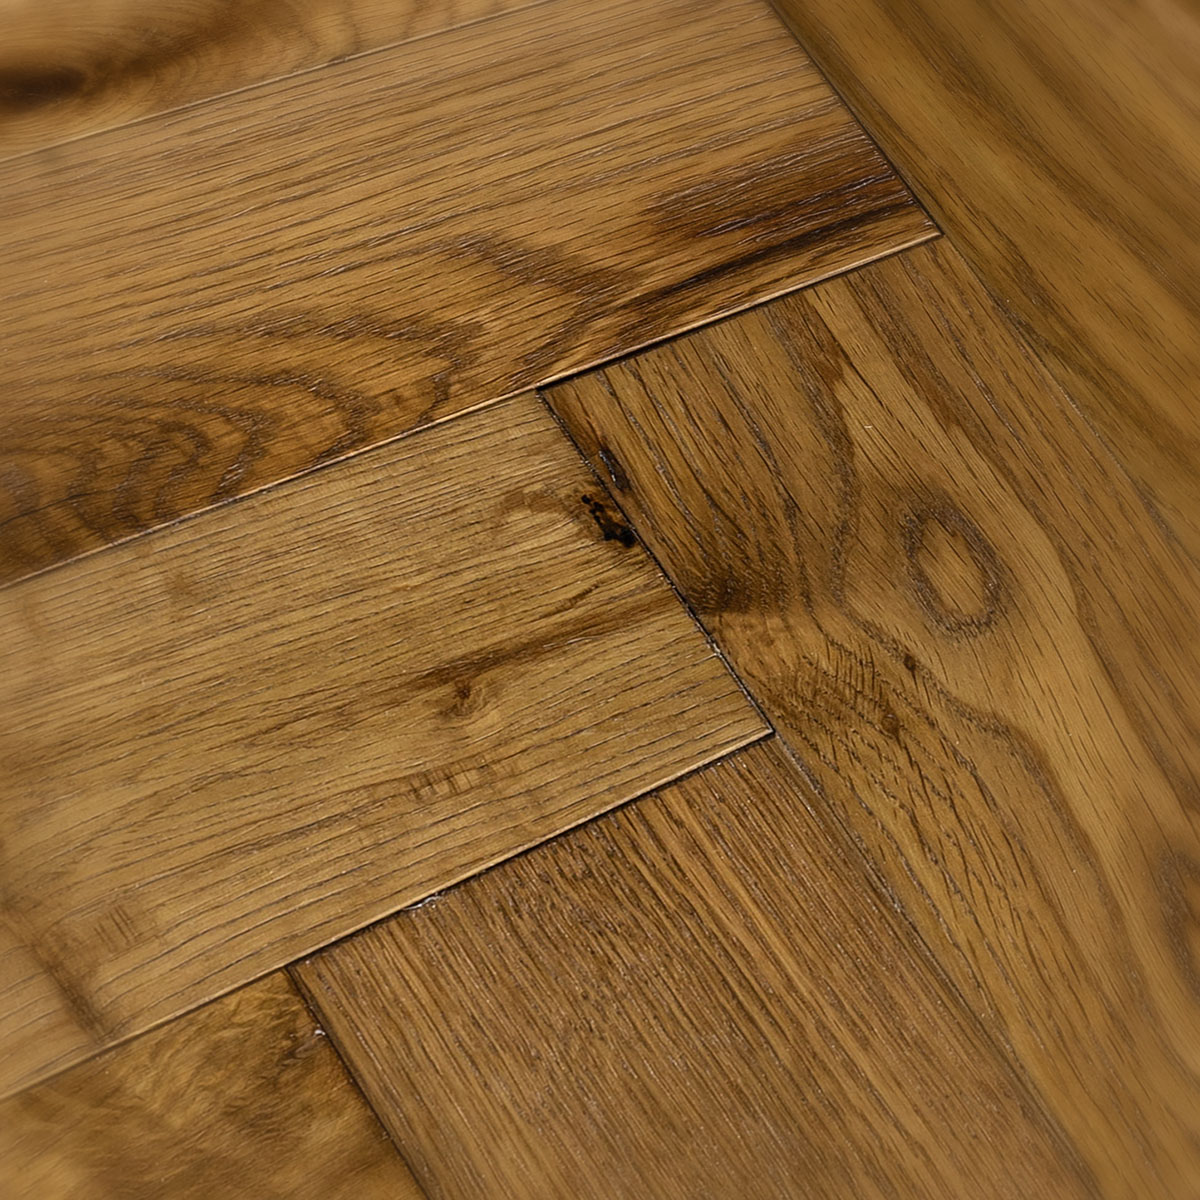 Coton Rise - Rustic Oak Herringbone Floor 280mm x 70mm